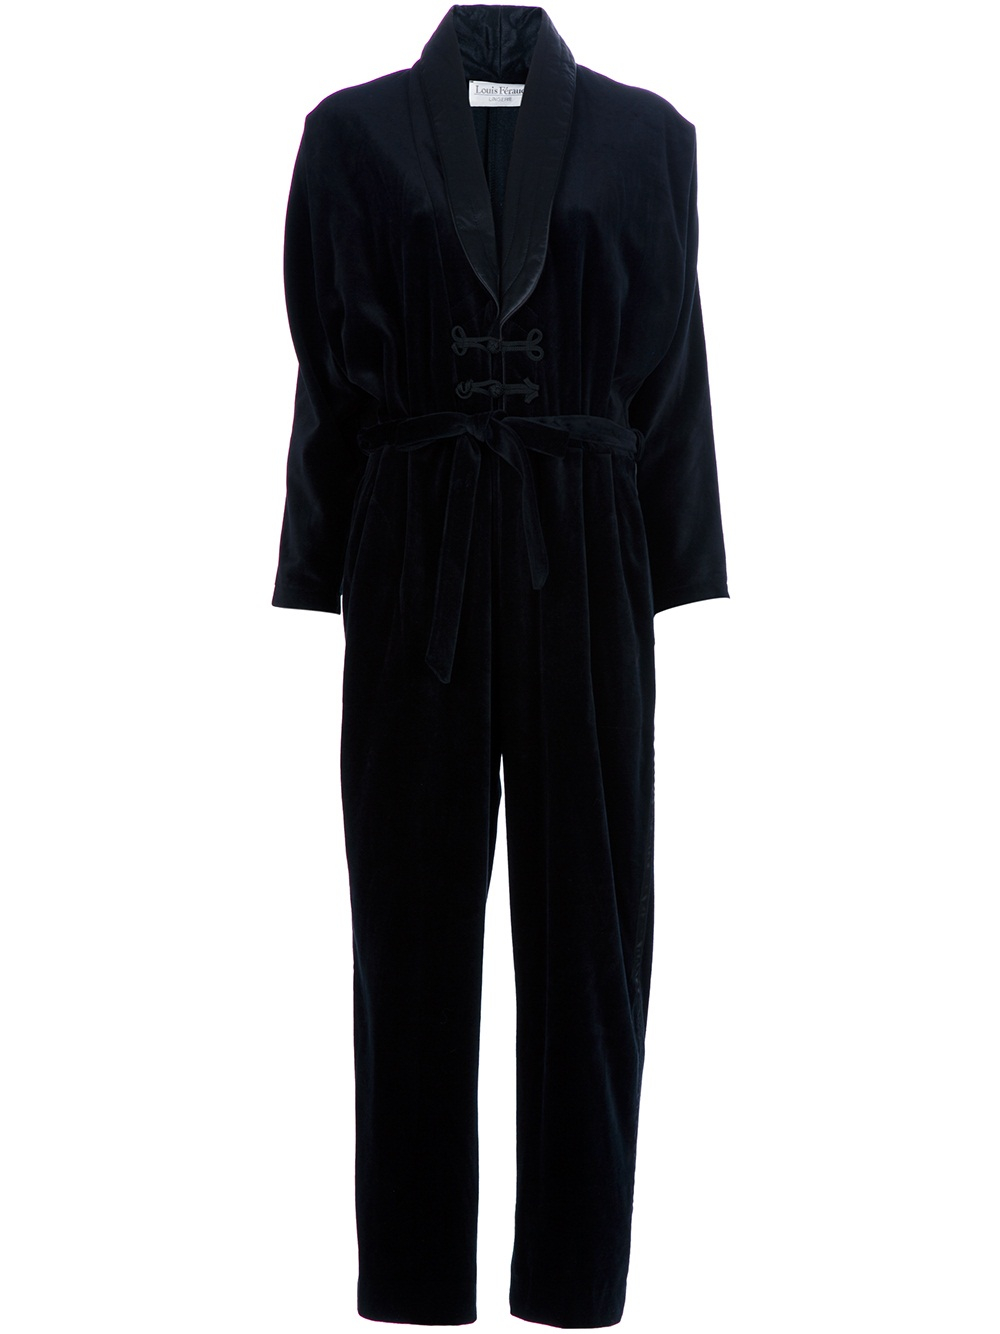 Louis Feraud Vintage Jumpsuit in Black | Lyst